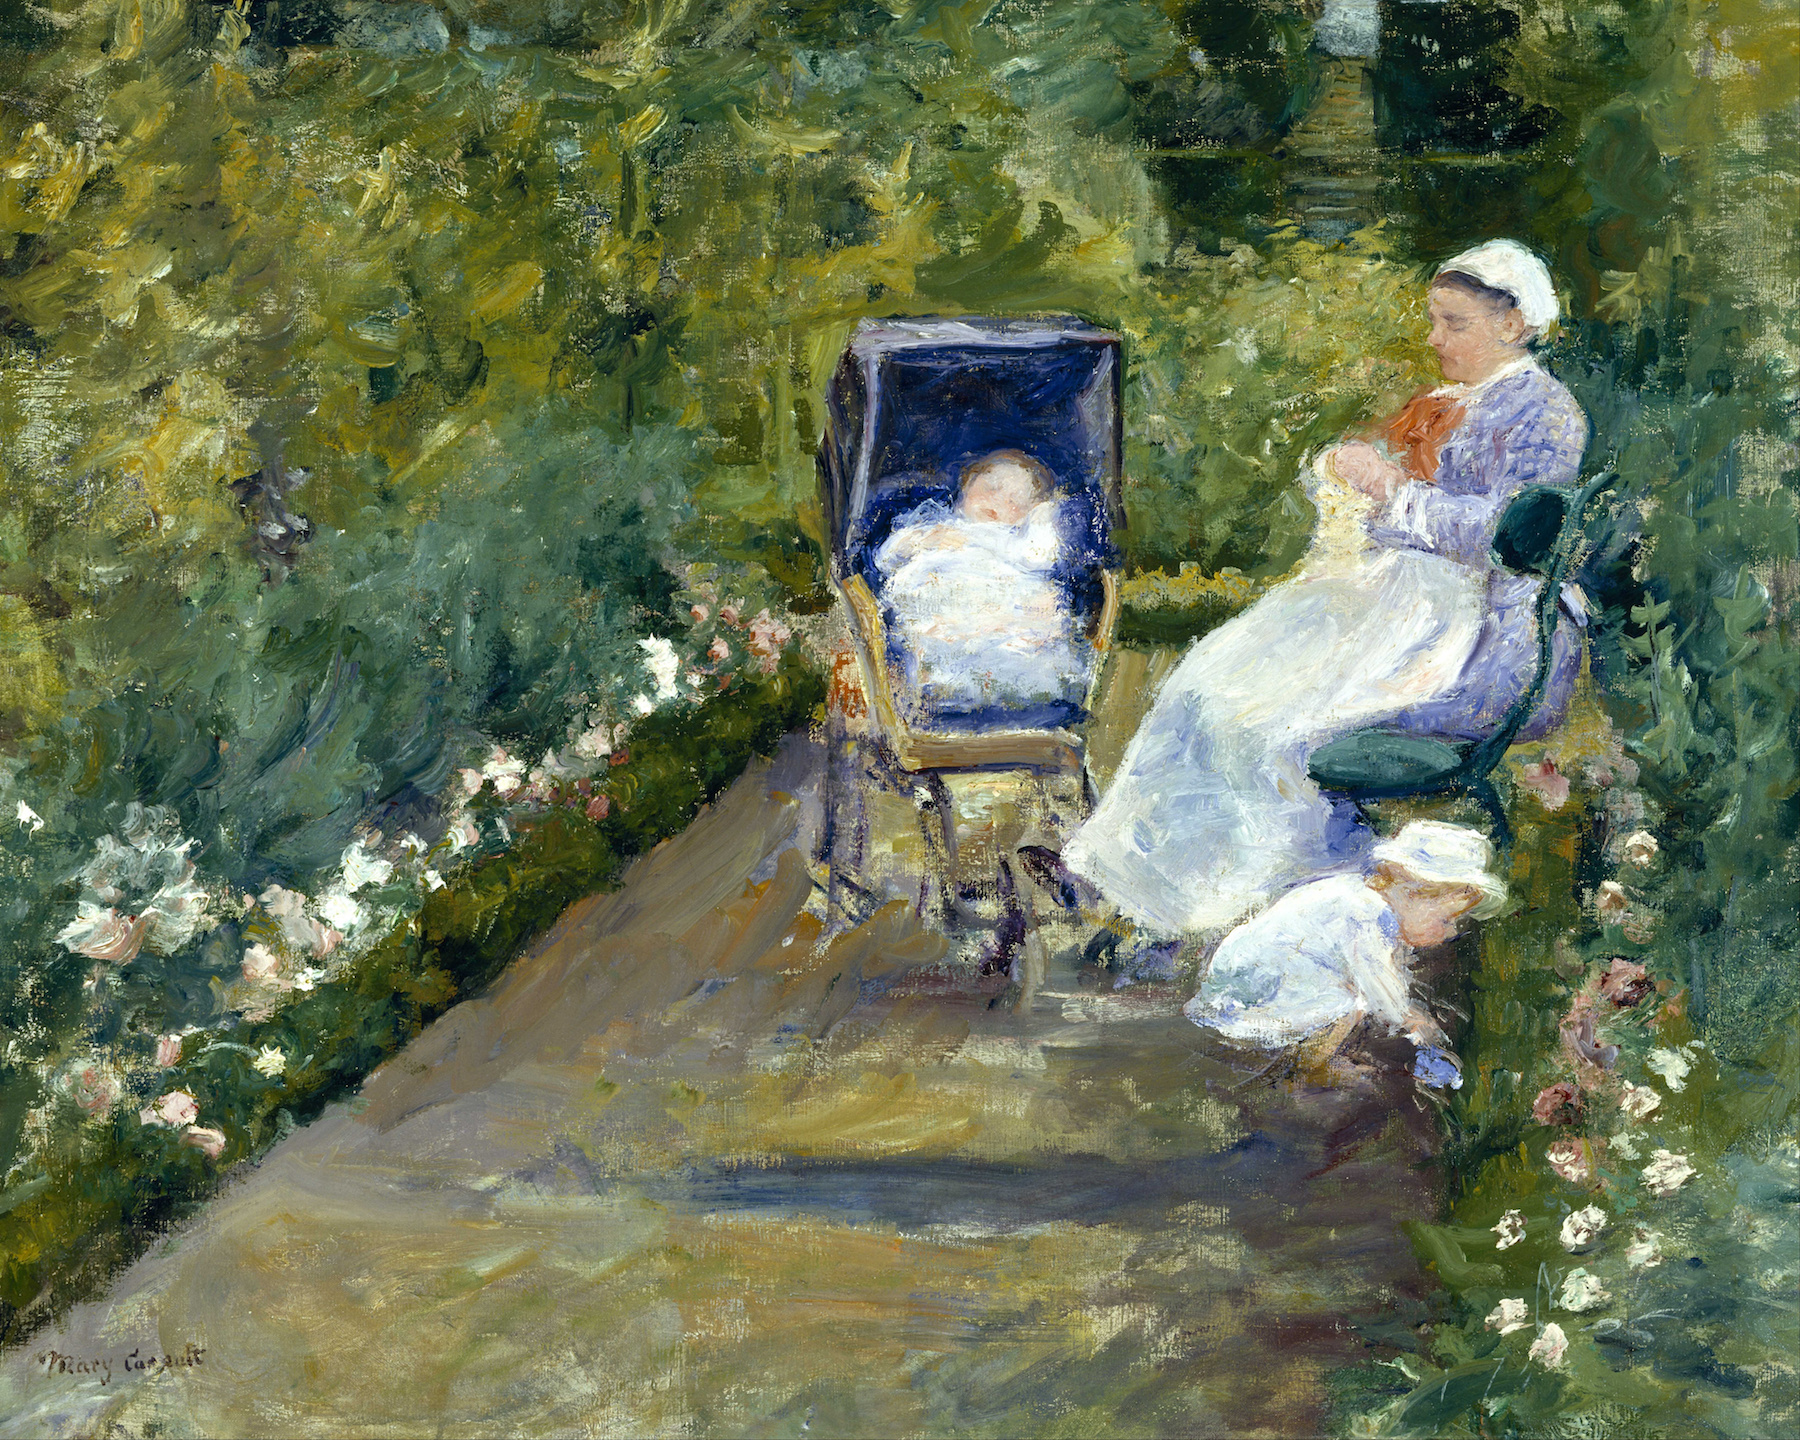 Çocuklar Bahçede (Hemşire) by Mary Cassatt - 1878 